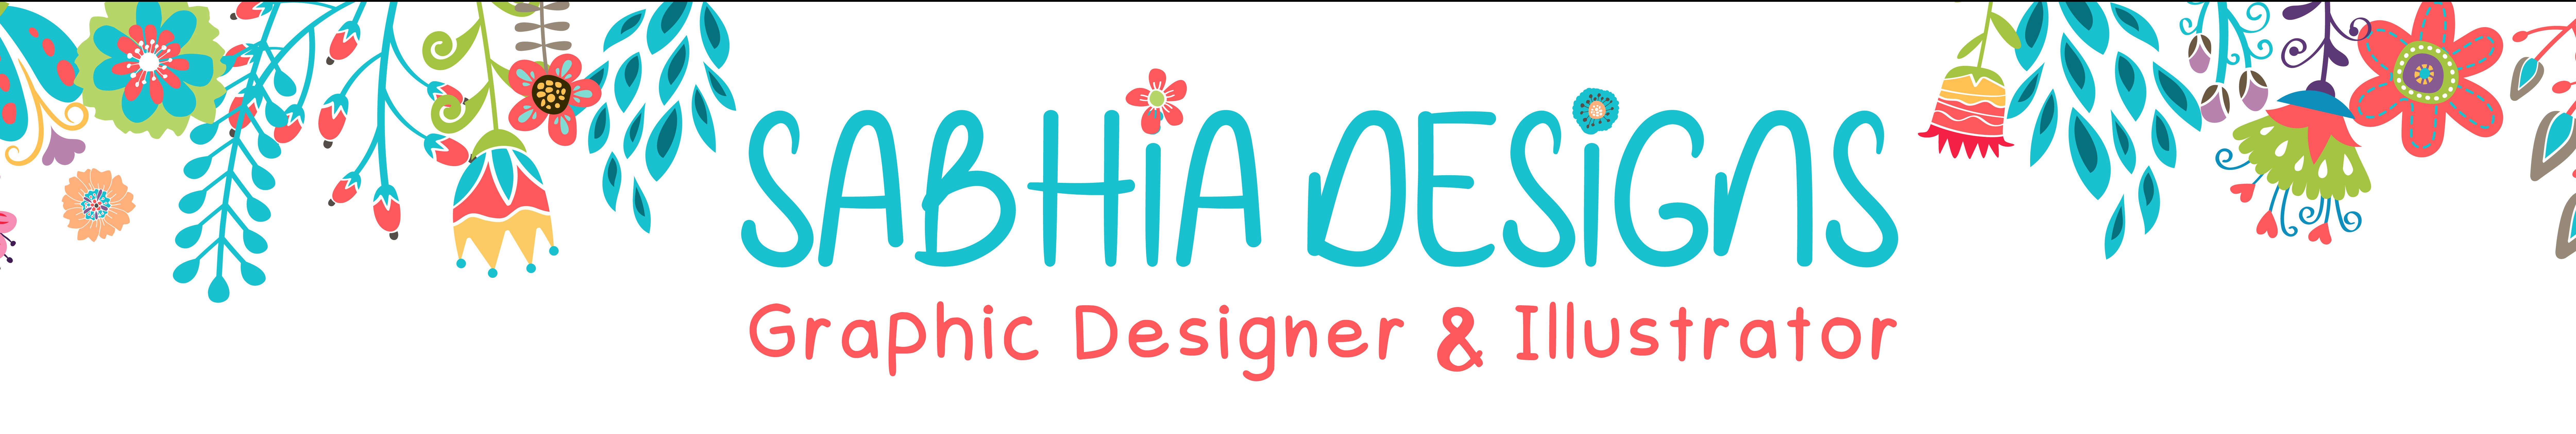 Sabhia Designs's profile banner